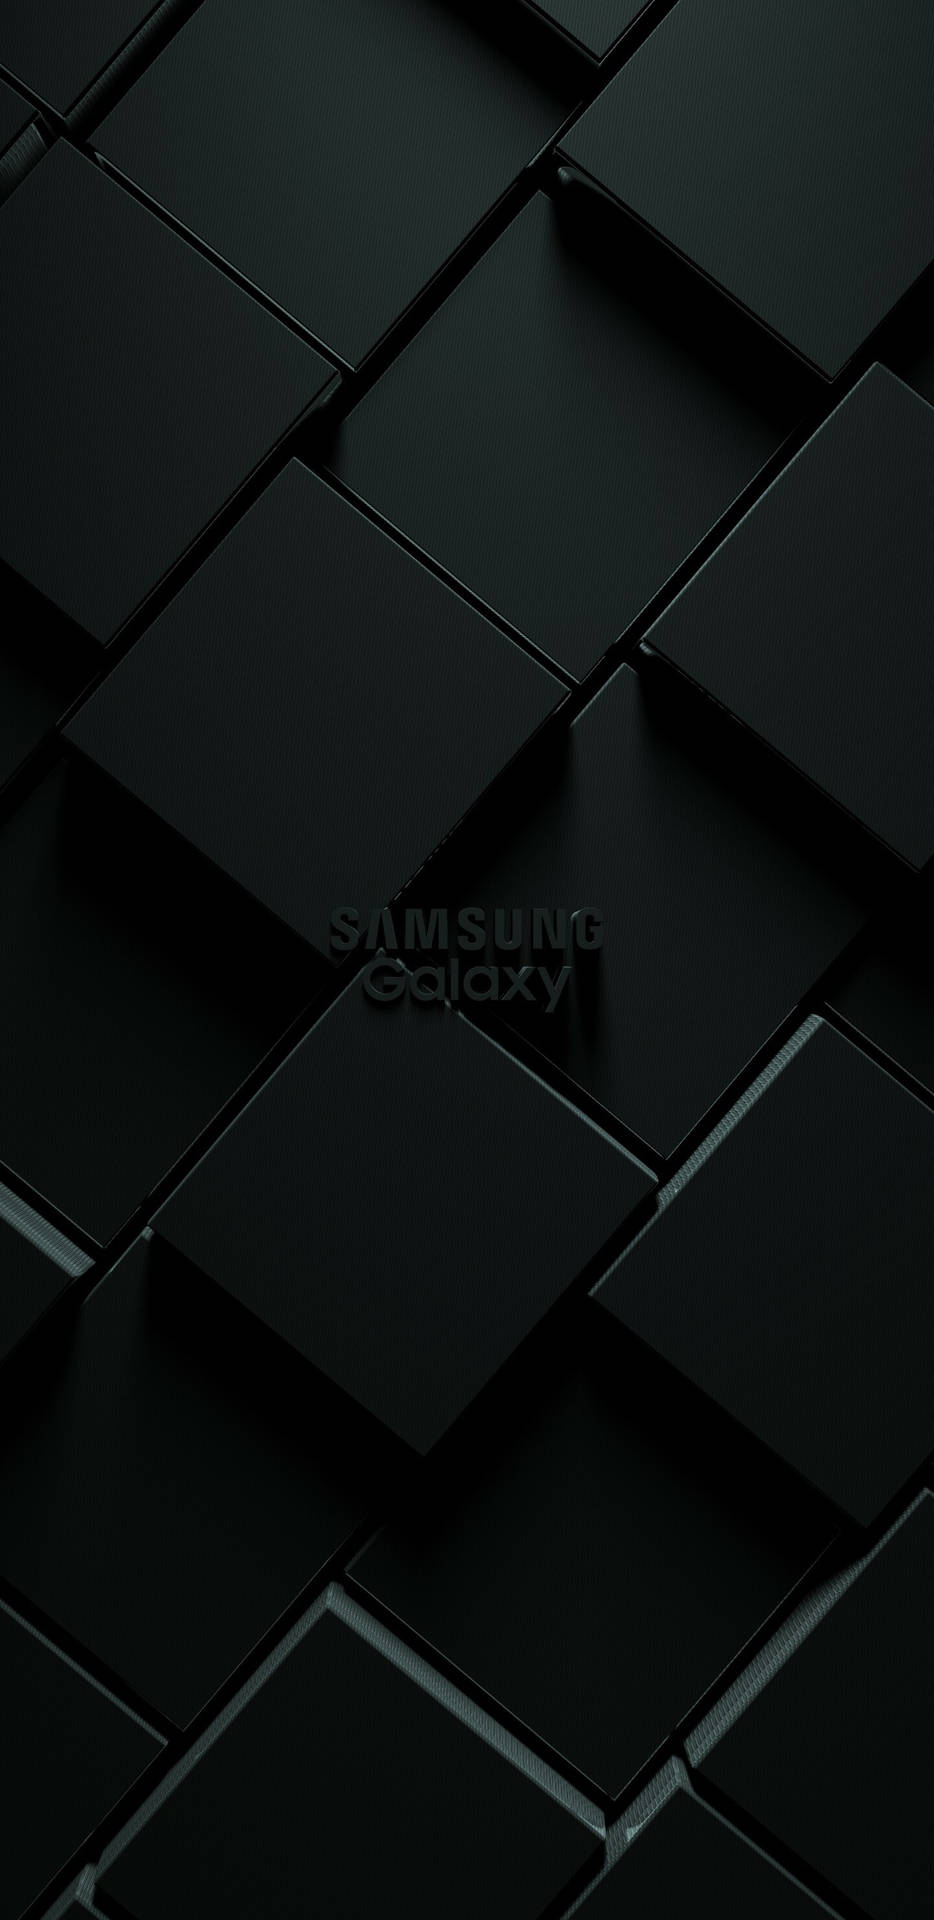 Samsung Galaxy 3d Dark Aesthetic Cubes Background